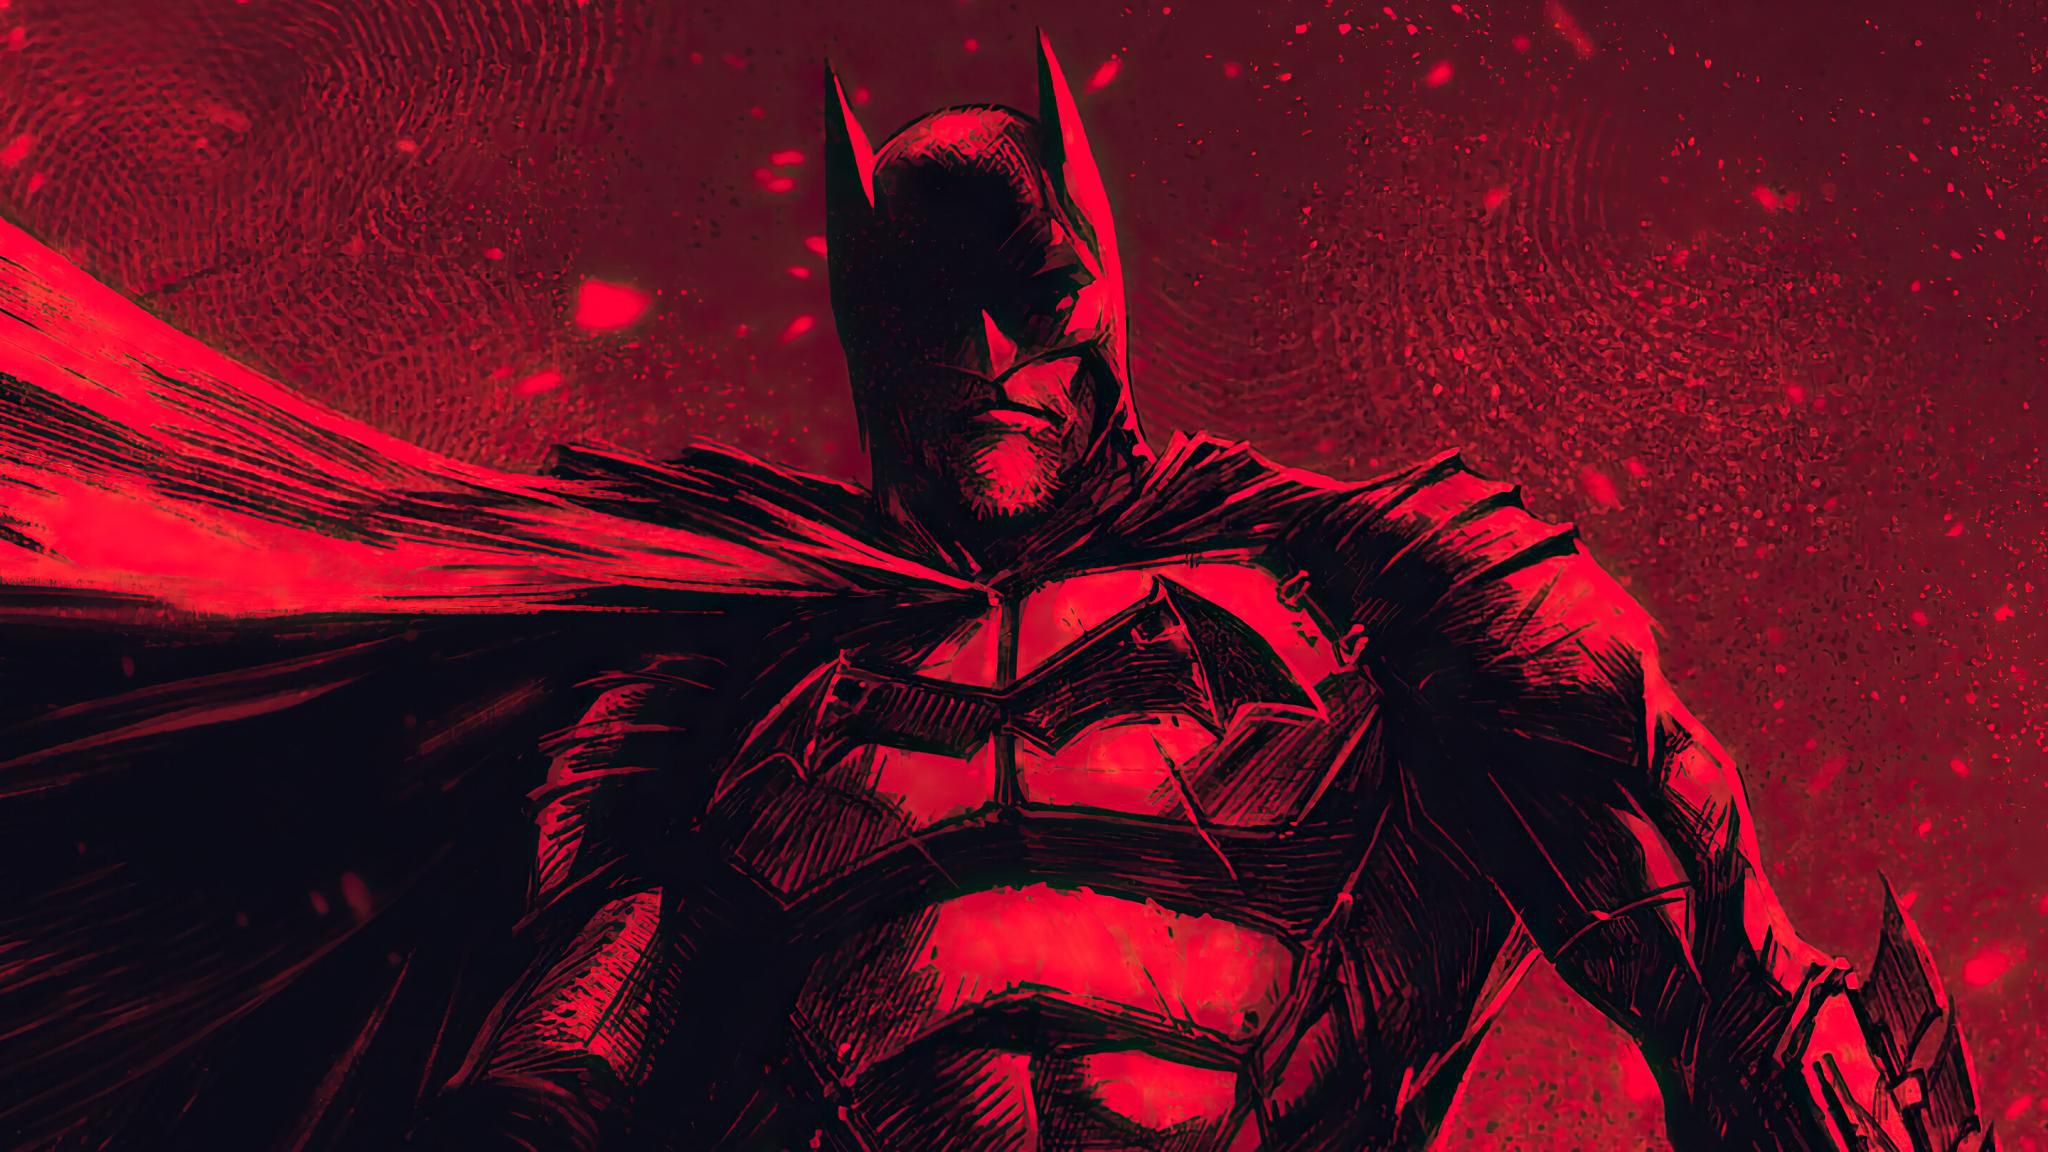 The Batman Marvel Wallpaper Full HD Free Download for Desktop, Laptop